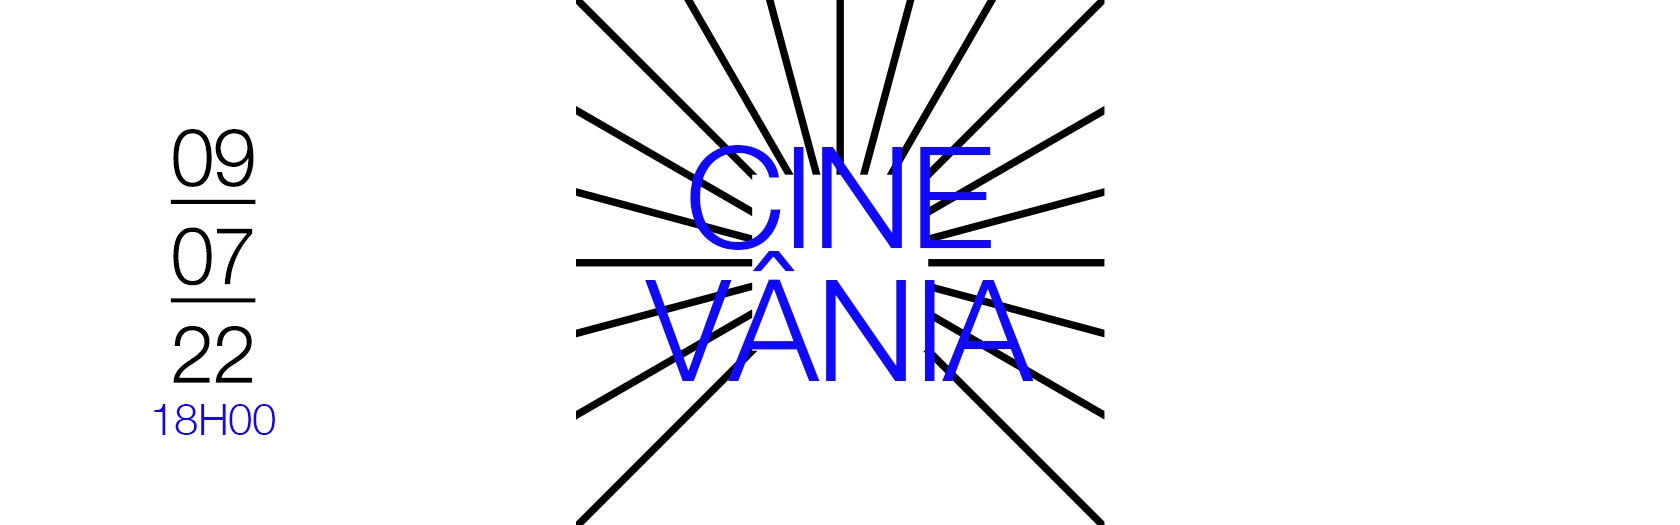 R_5_A_Flyer Cine Vânia